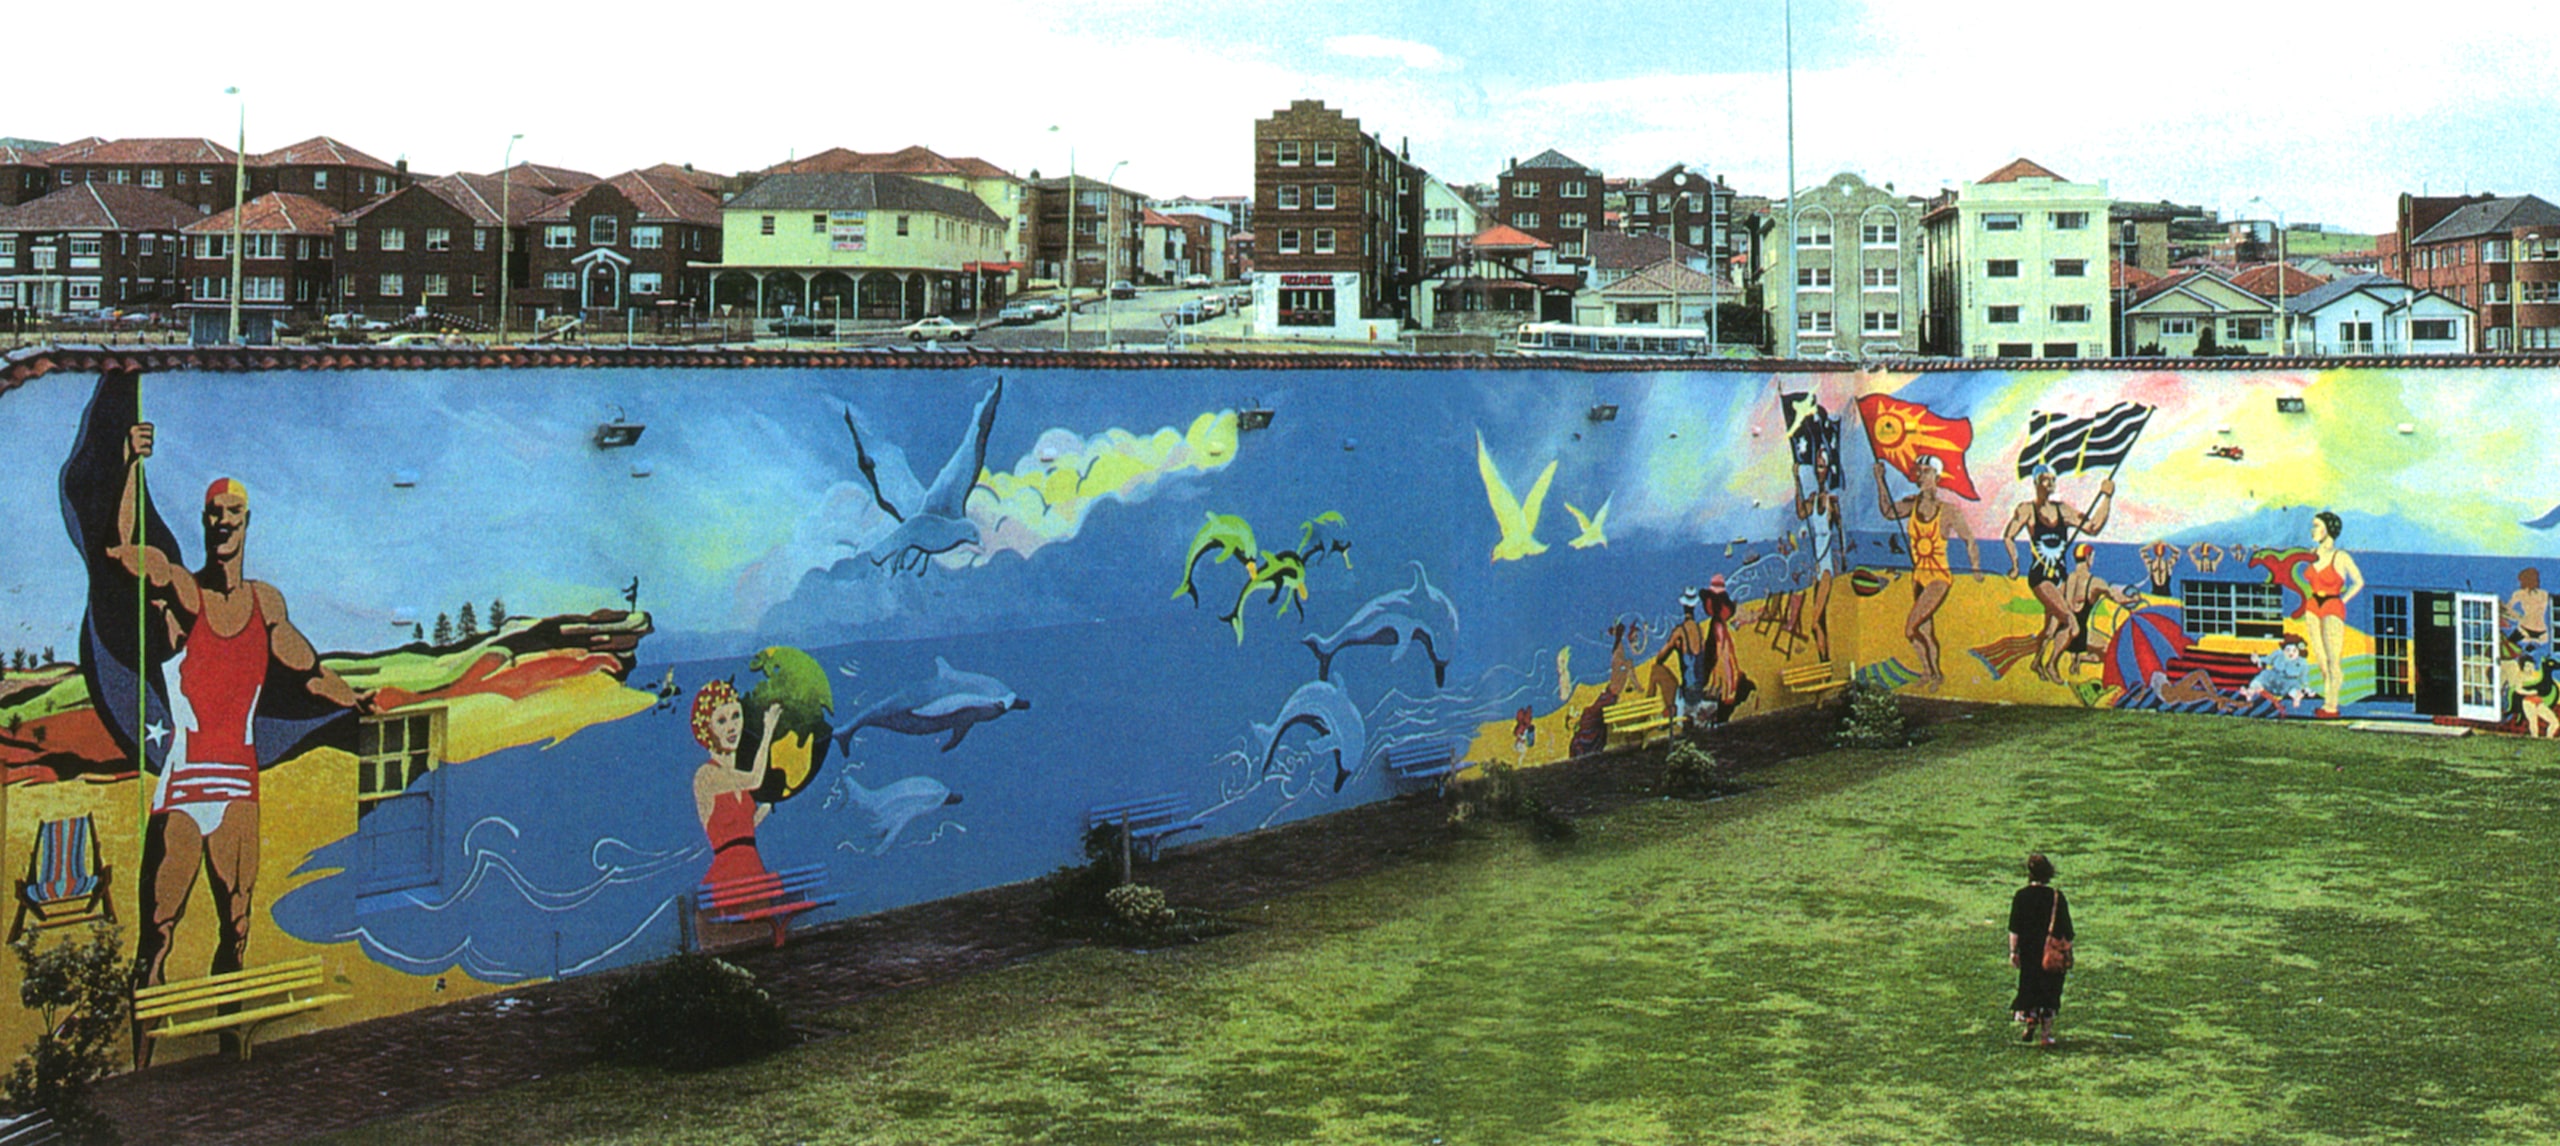  Artworks mural Bondi Pavilion